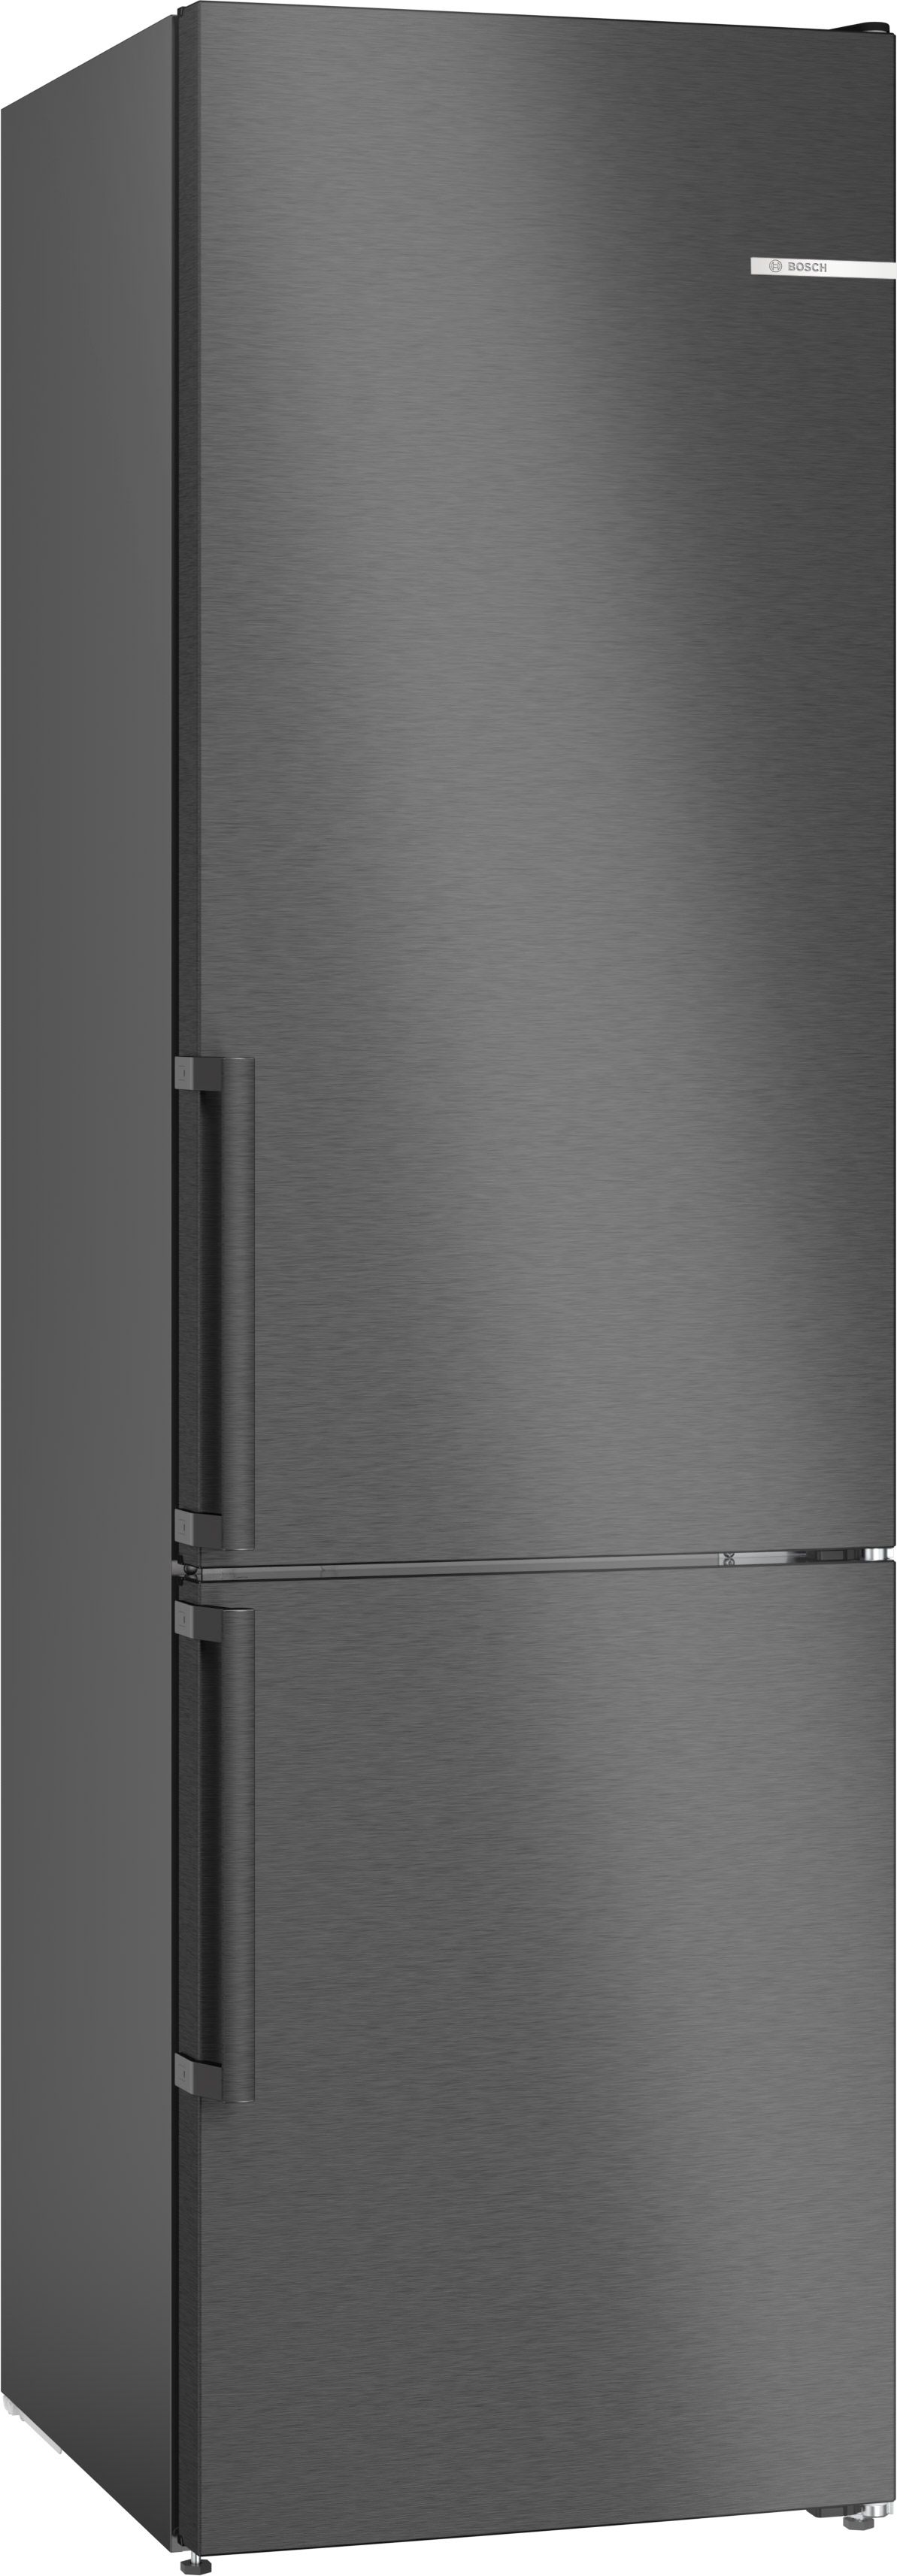 LG GBV3200DPY Frost Free Fridge Freezer